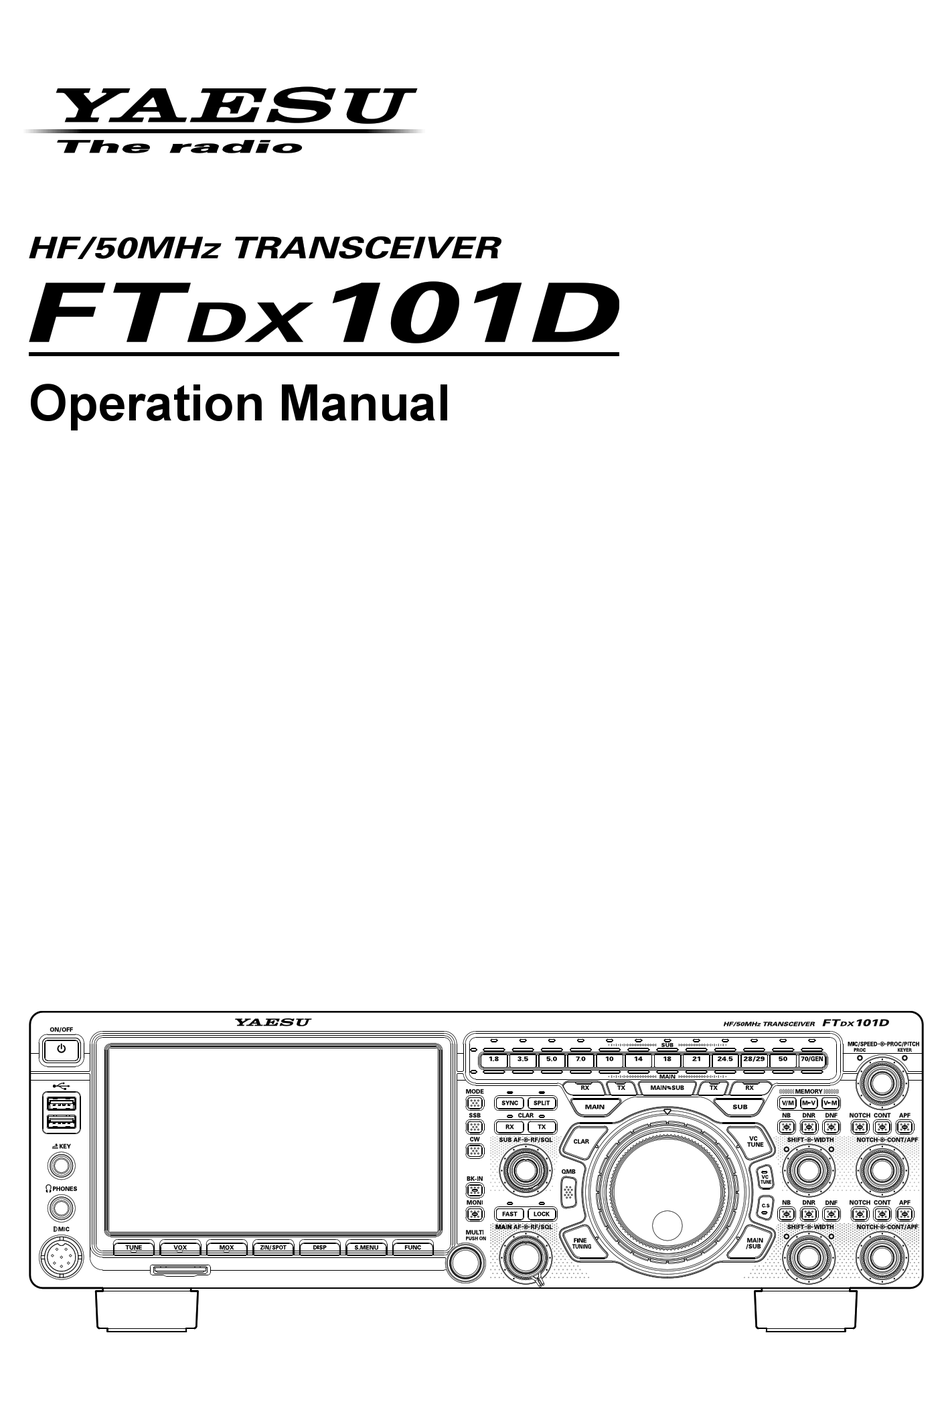 YAESU FTDX101D OPERATION MANUAL Pdf Download | ManualsLib